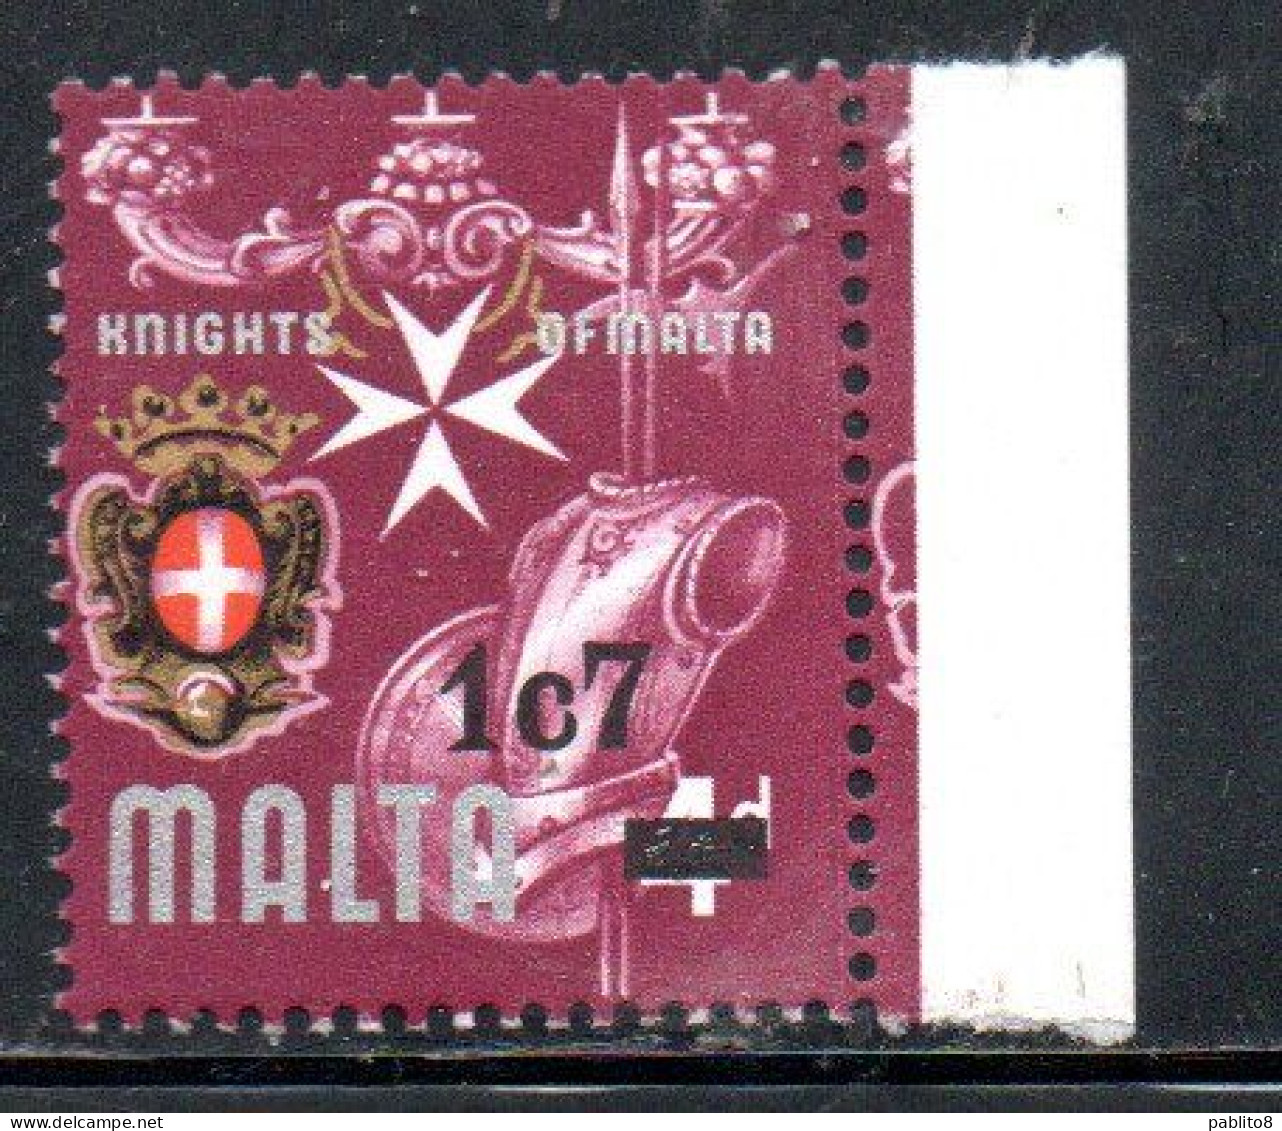 MALTA 1977 KNIGHTS ARMOR ARMATURE DI CAVALIERI COAT OF ARMS STEMMA ARMOIRIES SURCHARGED 1c7m ON 4p SURCHARGE MNH - Malte